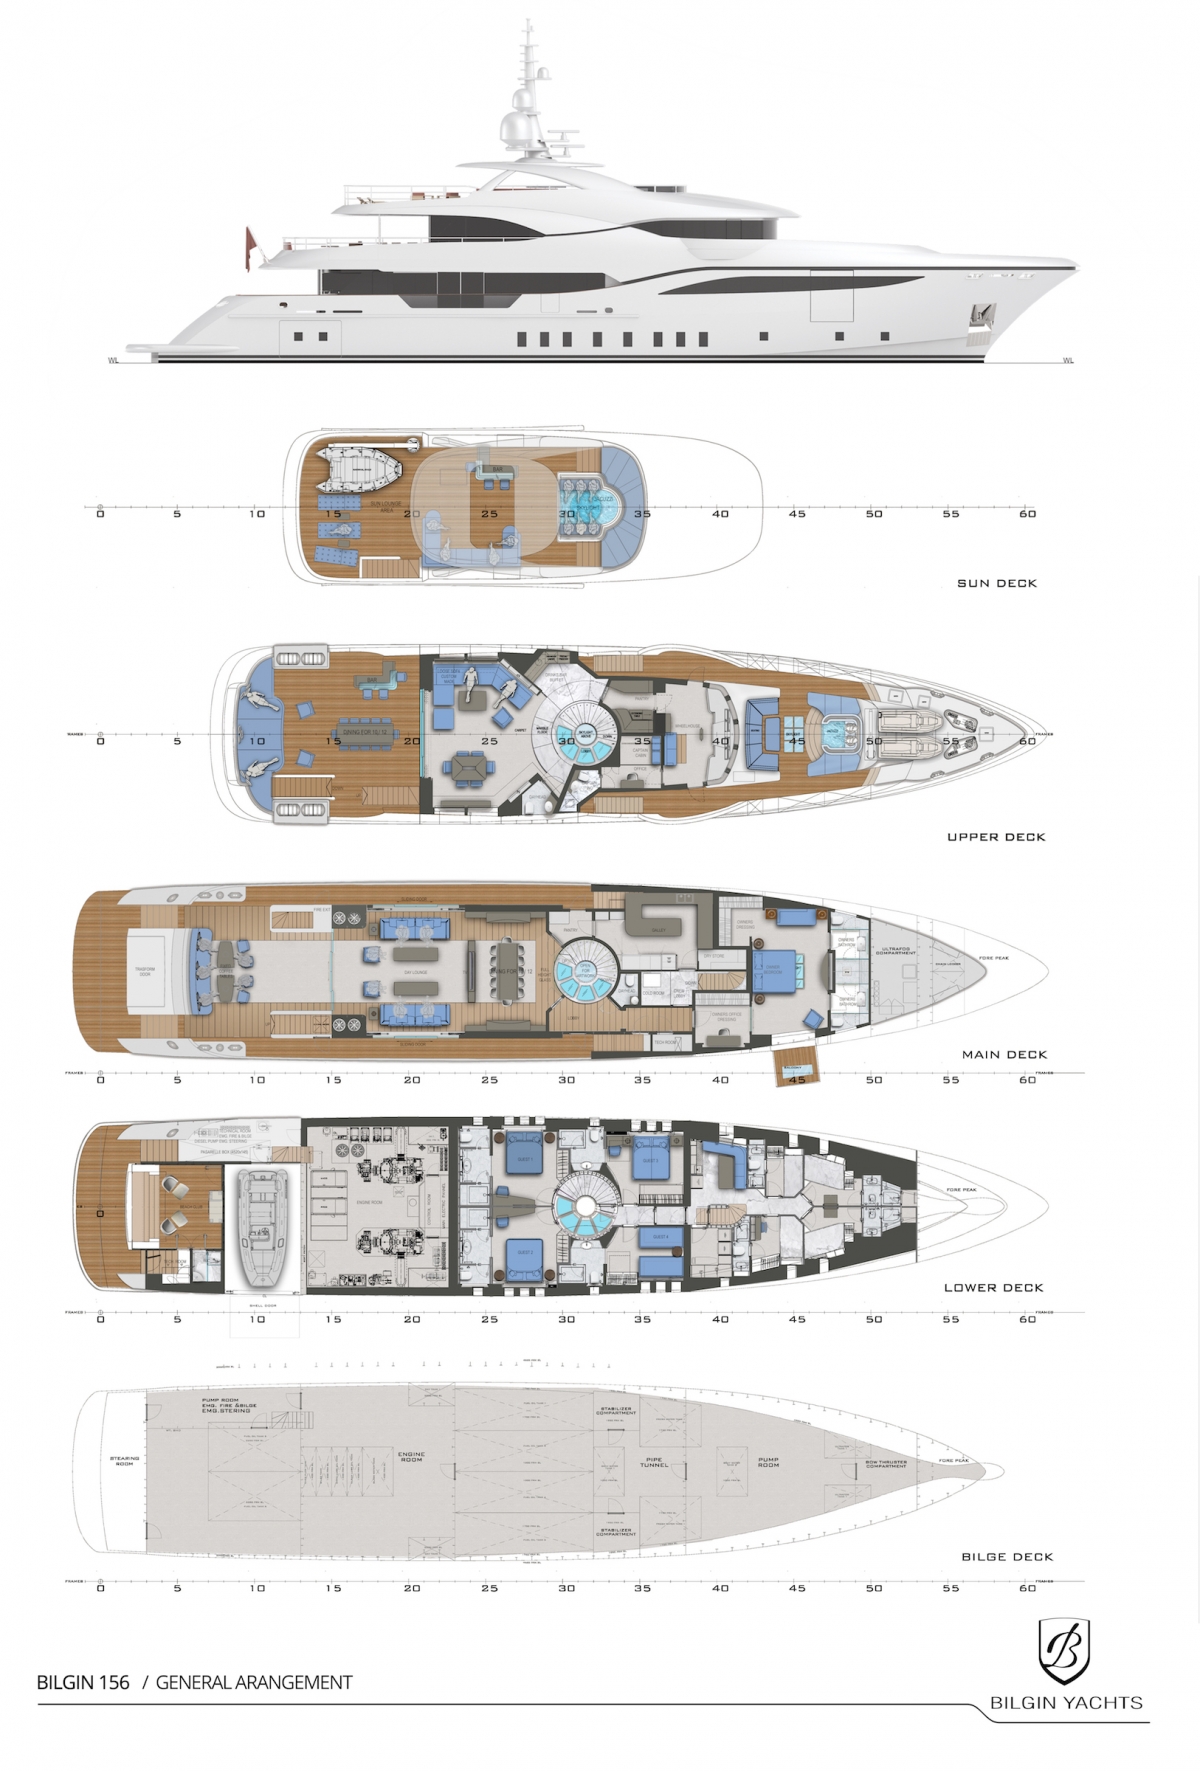 STARBURST GA Superyacht Profiles